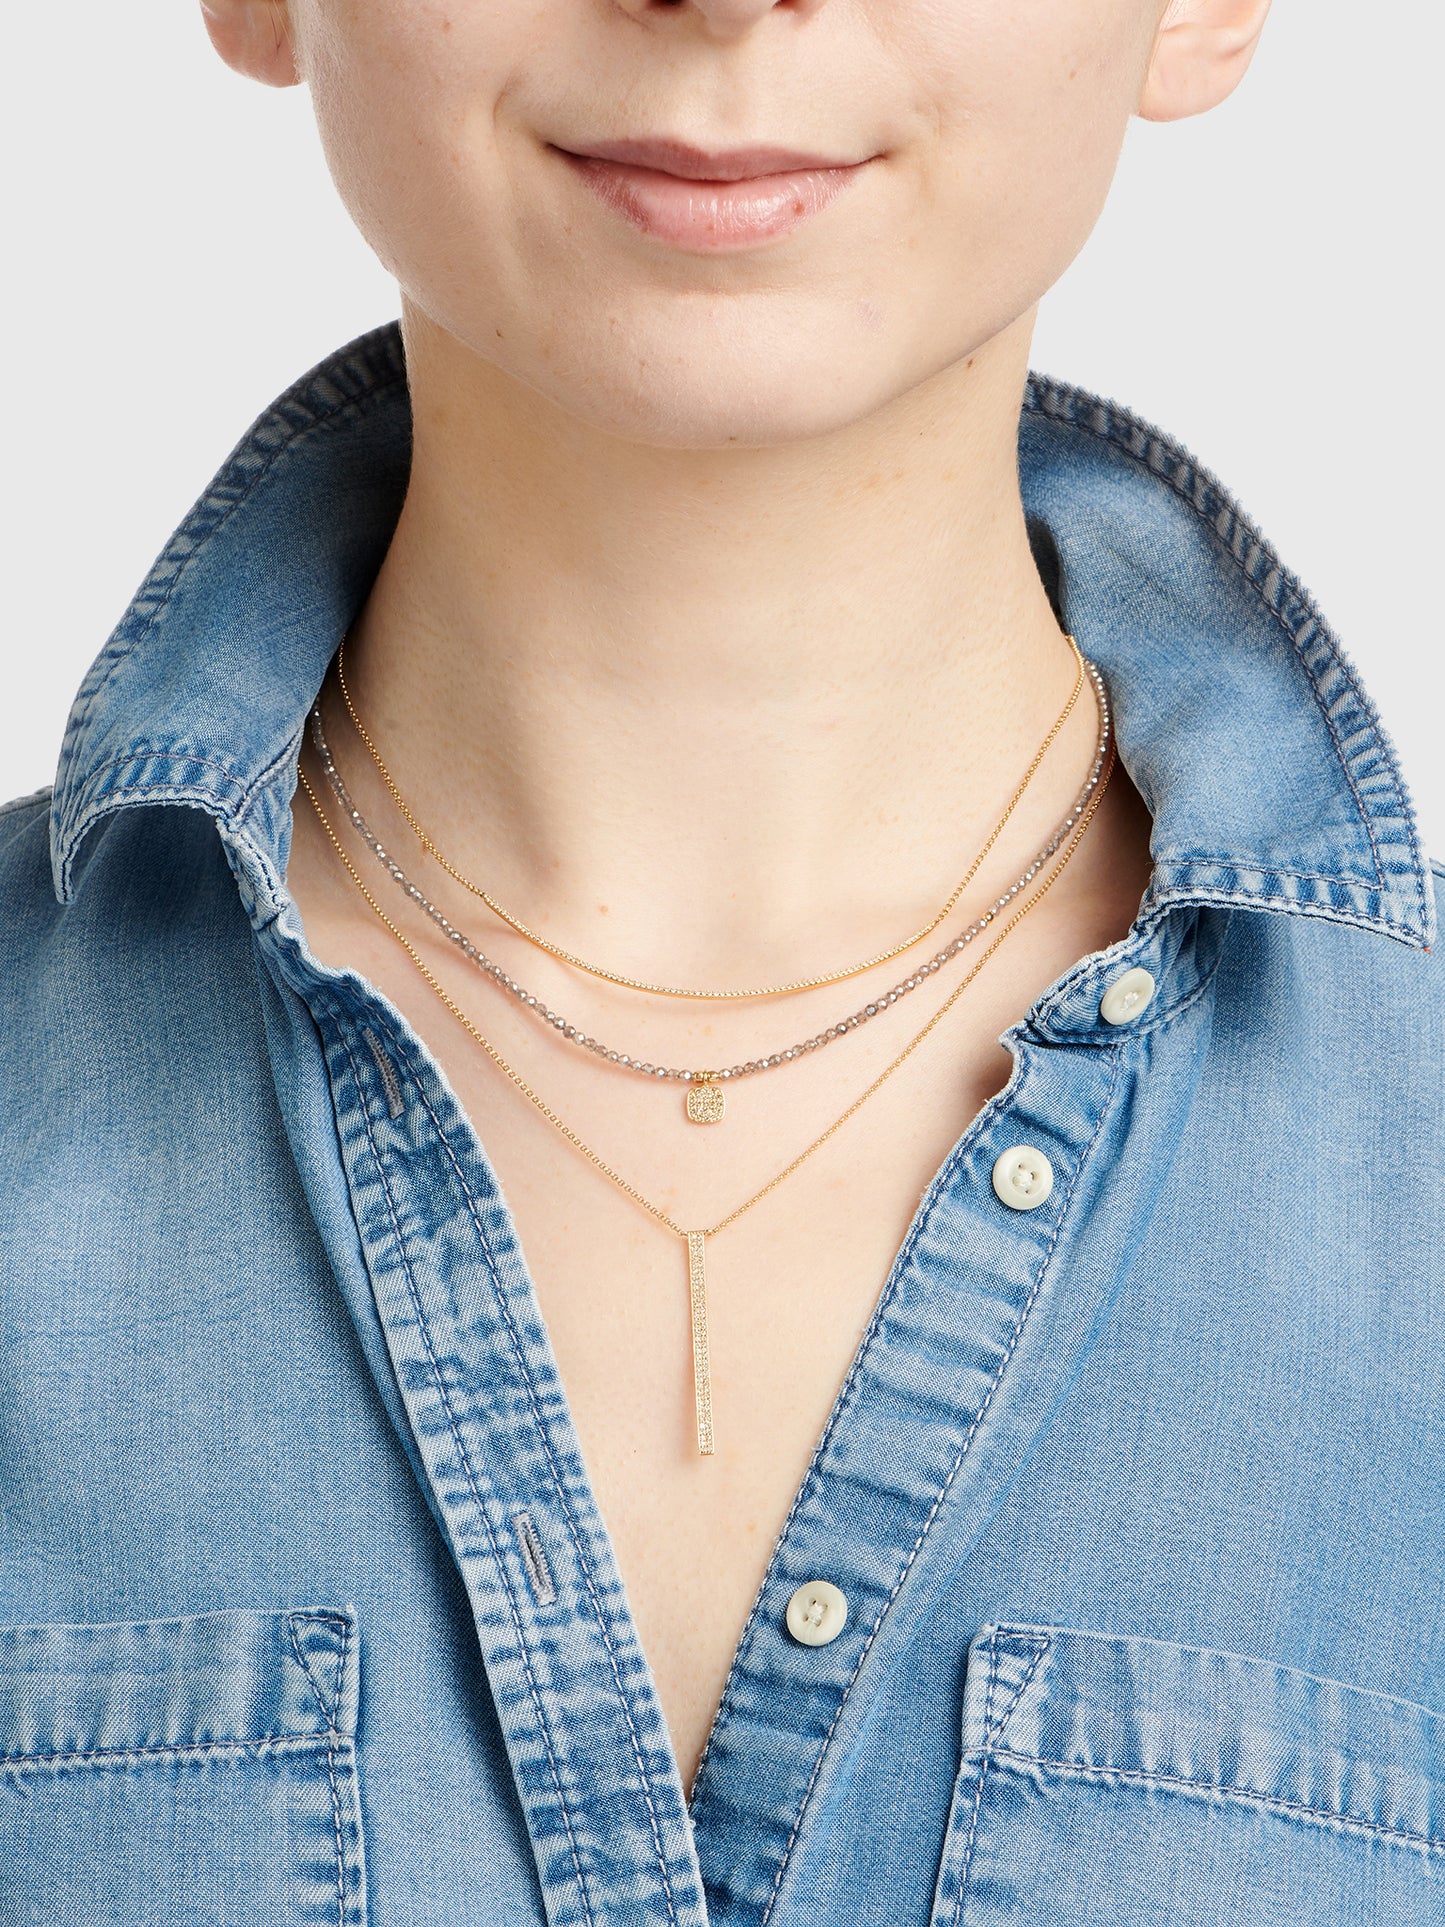 S. Bell Garnet Necklace with Follow Your Heart 14K Diamond Pendant